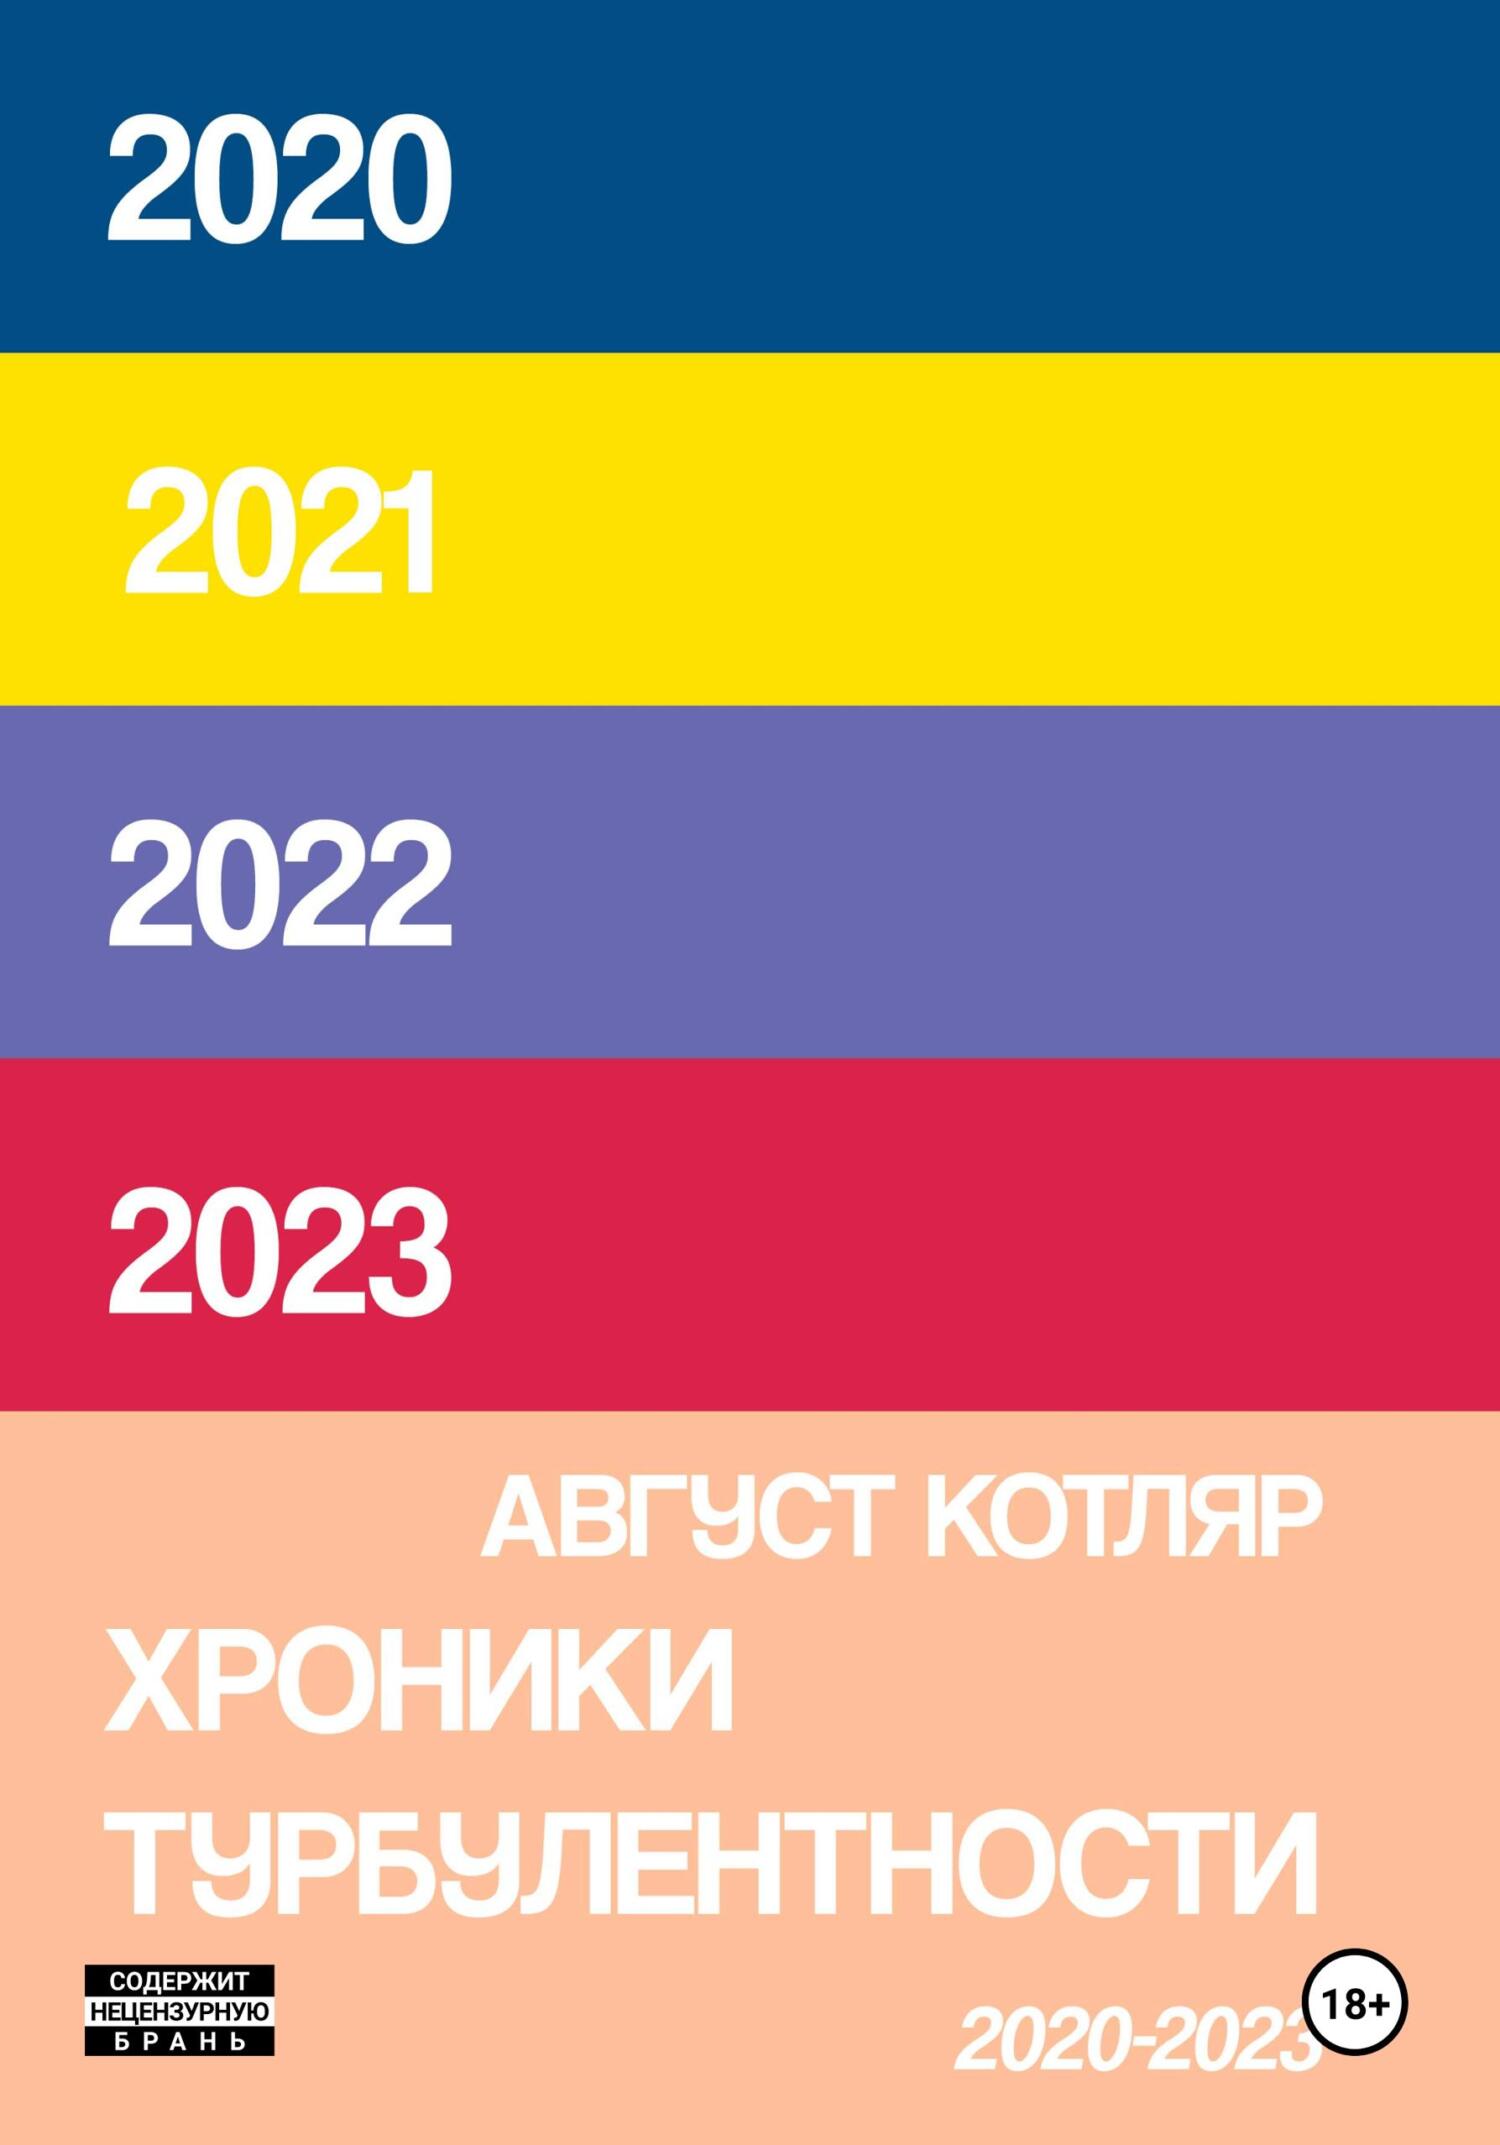 Хроники турбулентости 2020-2023 - Август Котляр